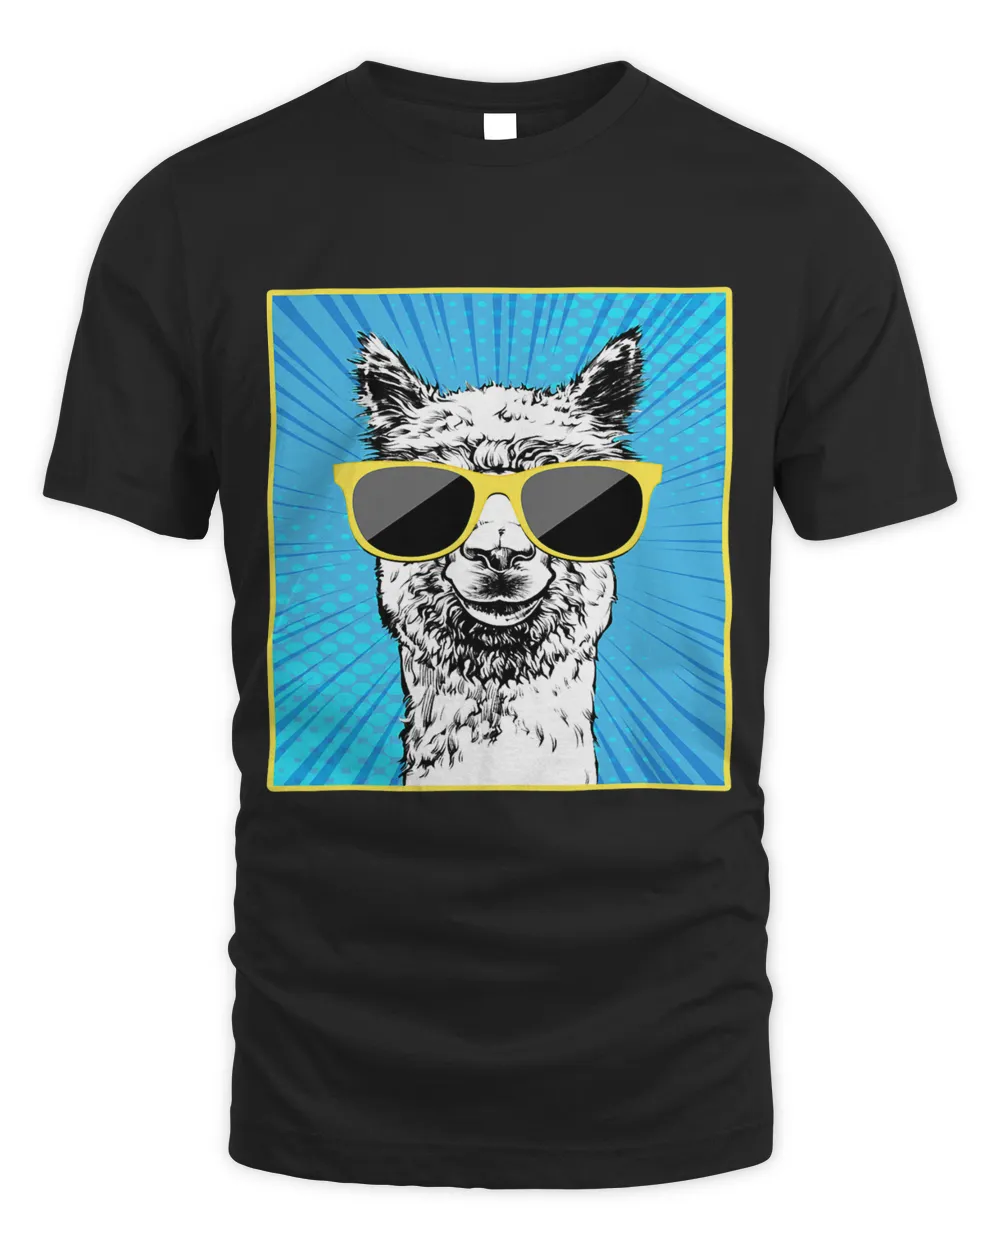 Llama Portrait Pop Art Animal with Sunglasses